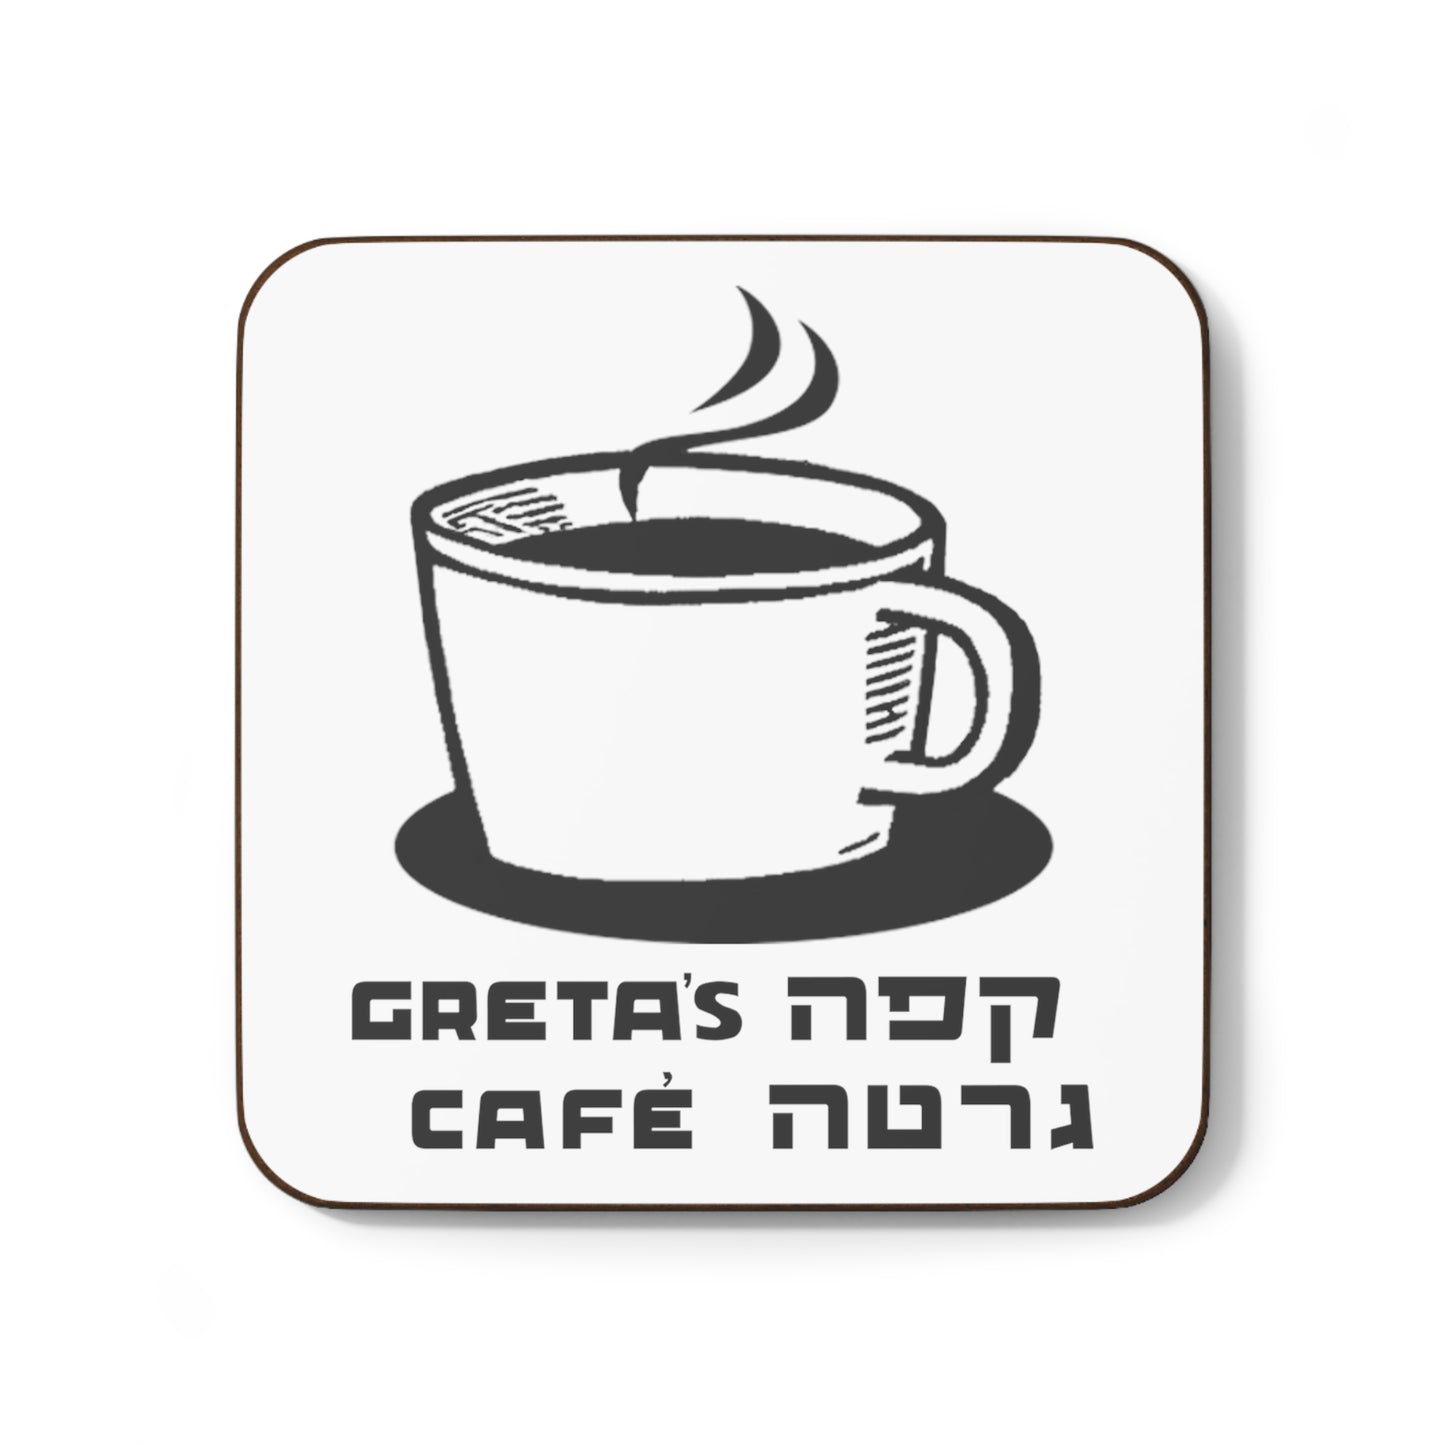 Greta's Cafe coaster